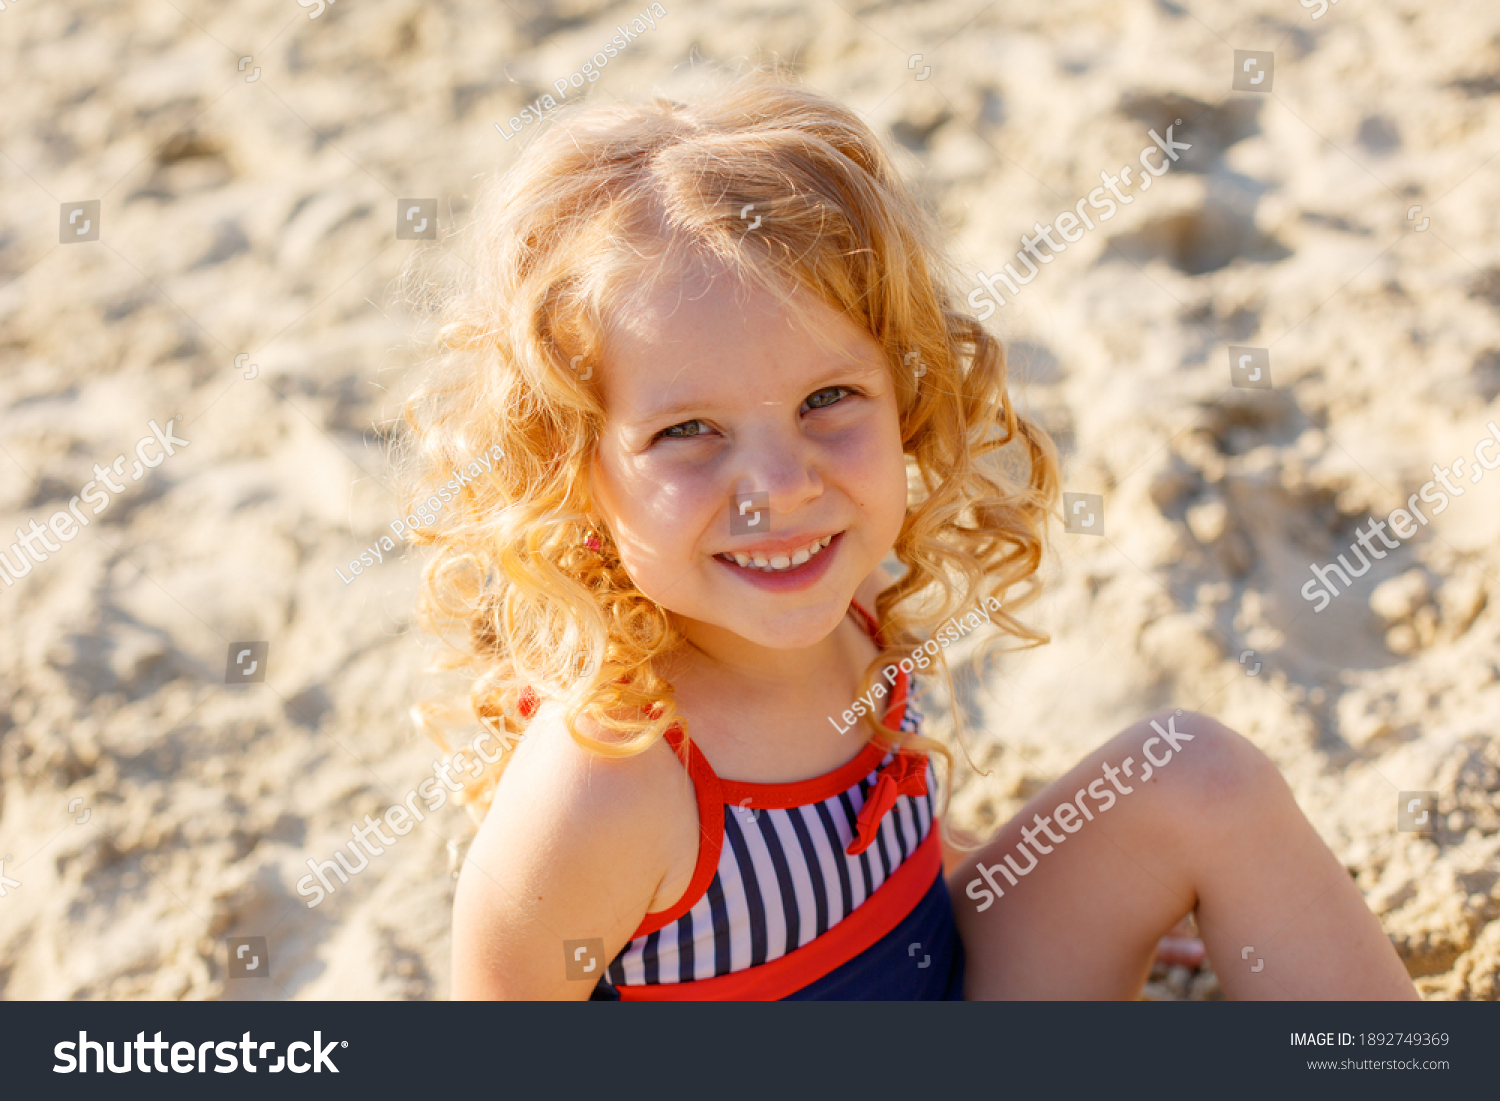 Little Girl Sitting On Beach On Stock Photo 1892749369 | Shutterstock